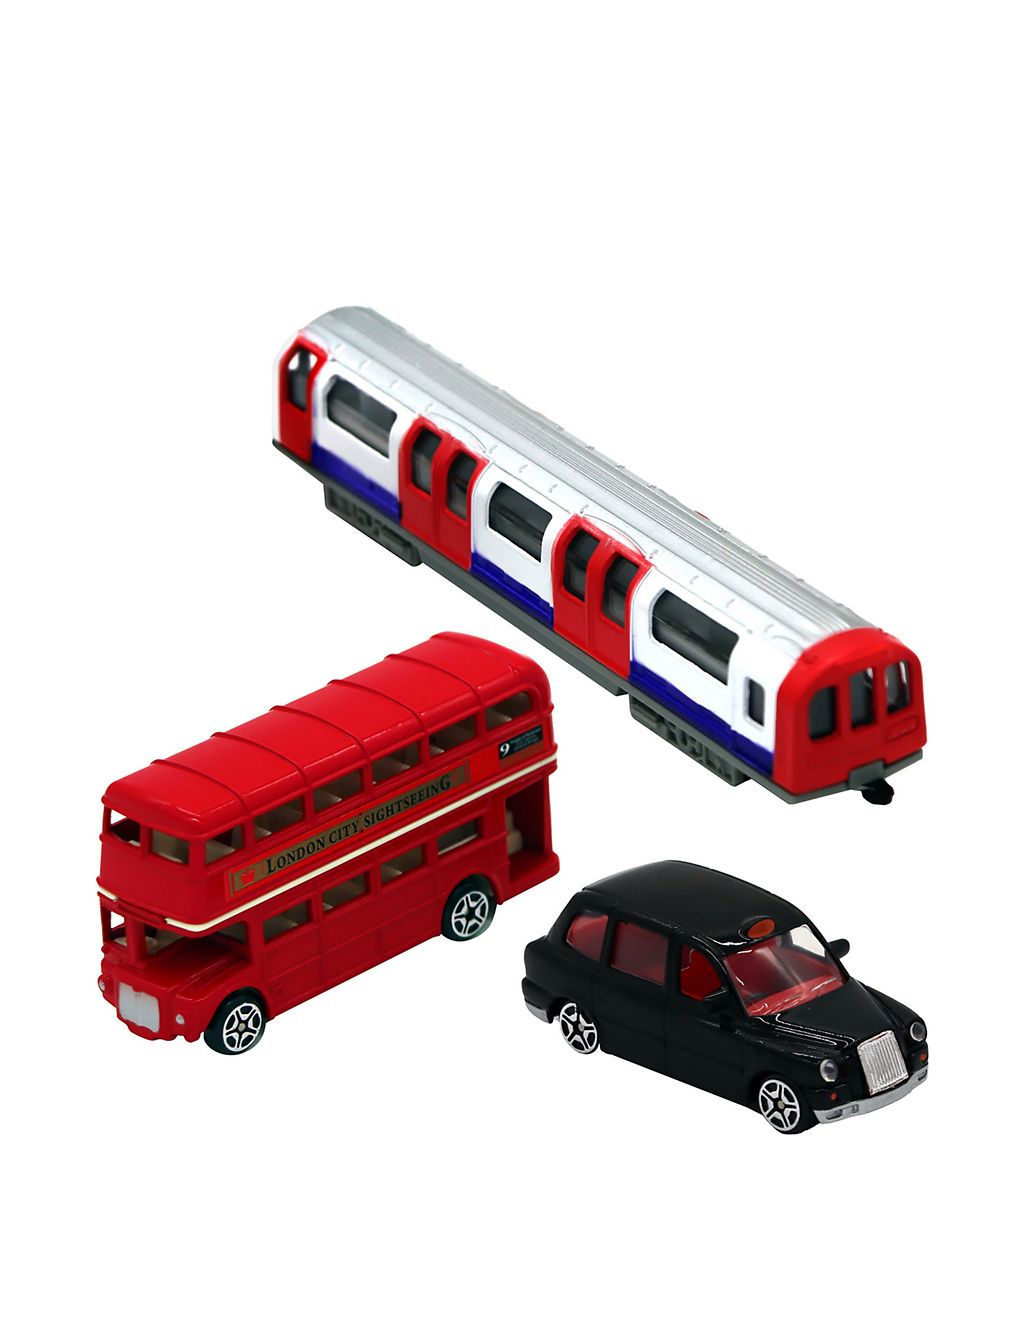 London Trio Transport Vehicles Set (3+ Yrs) 1 of 5